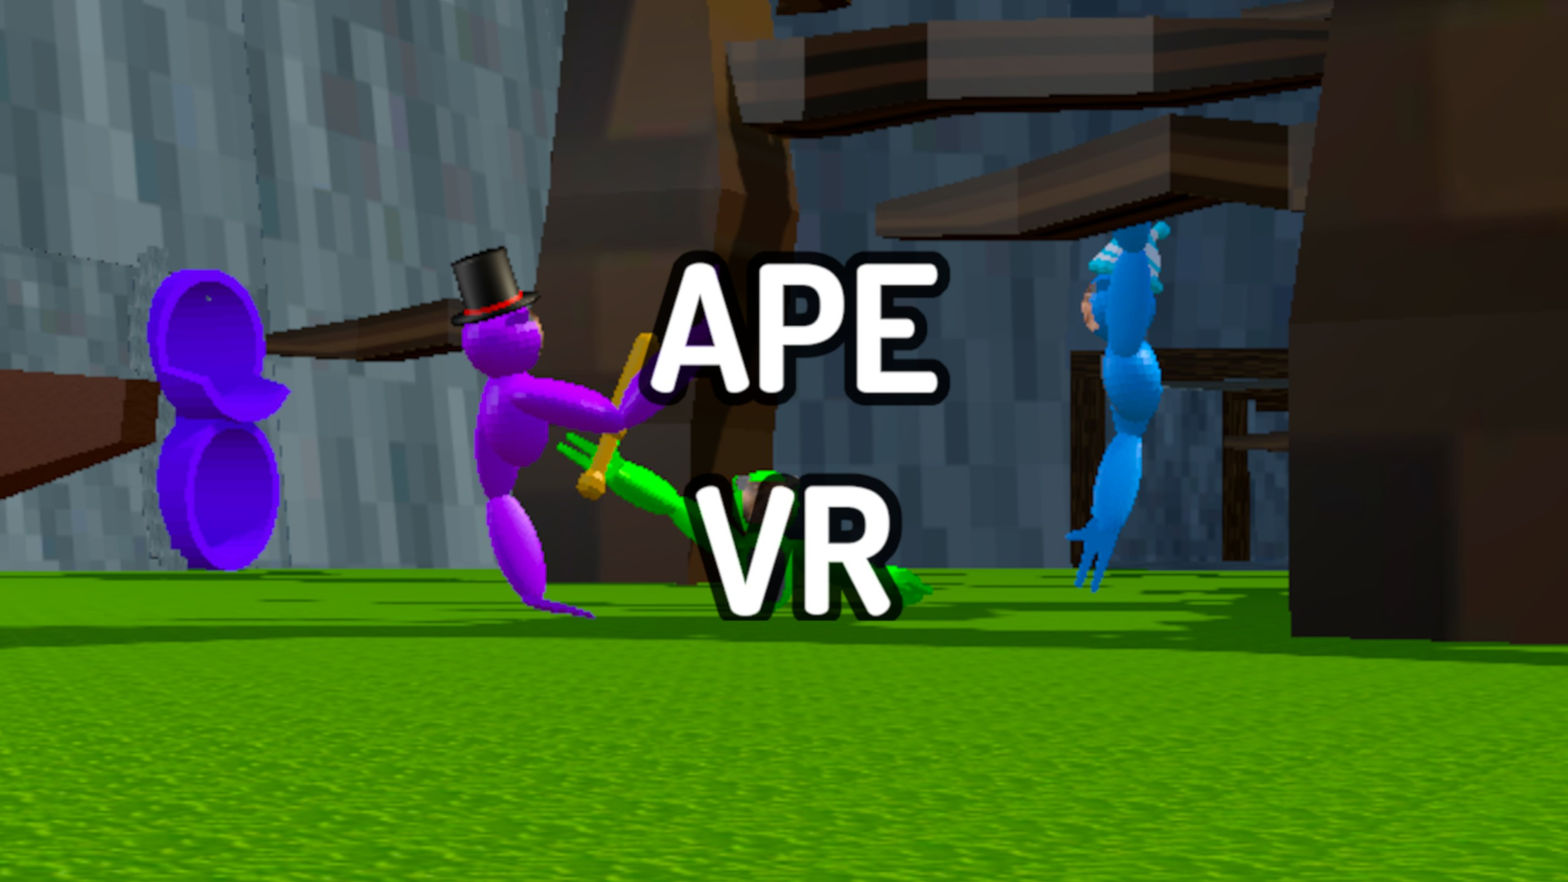 Ape VR